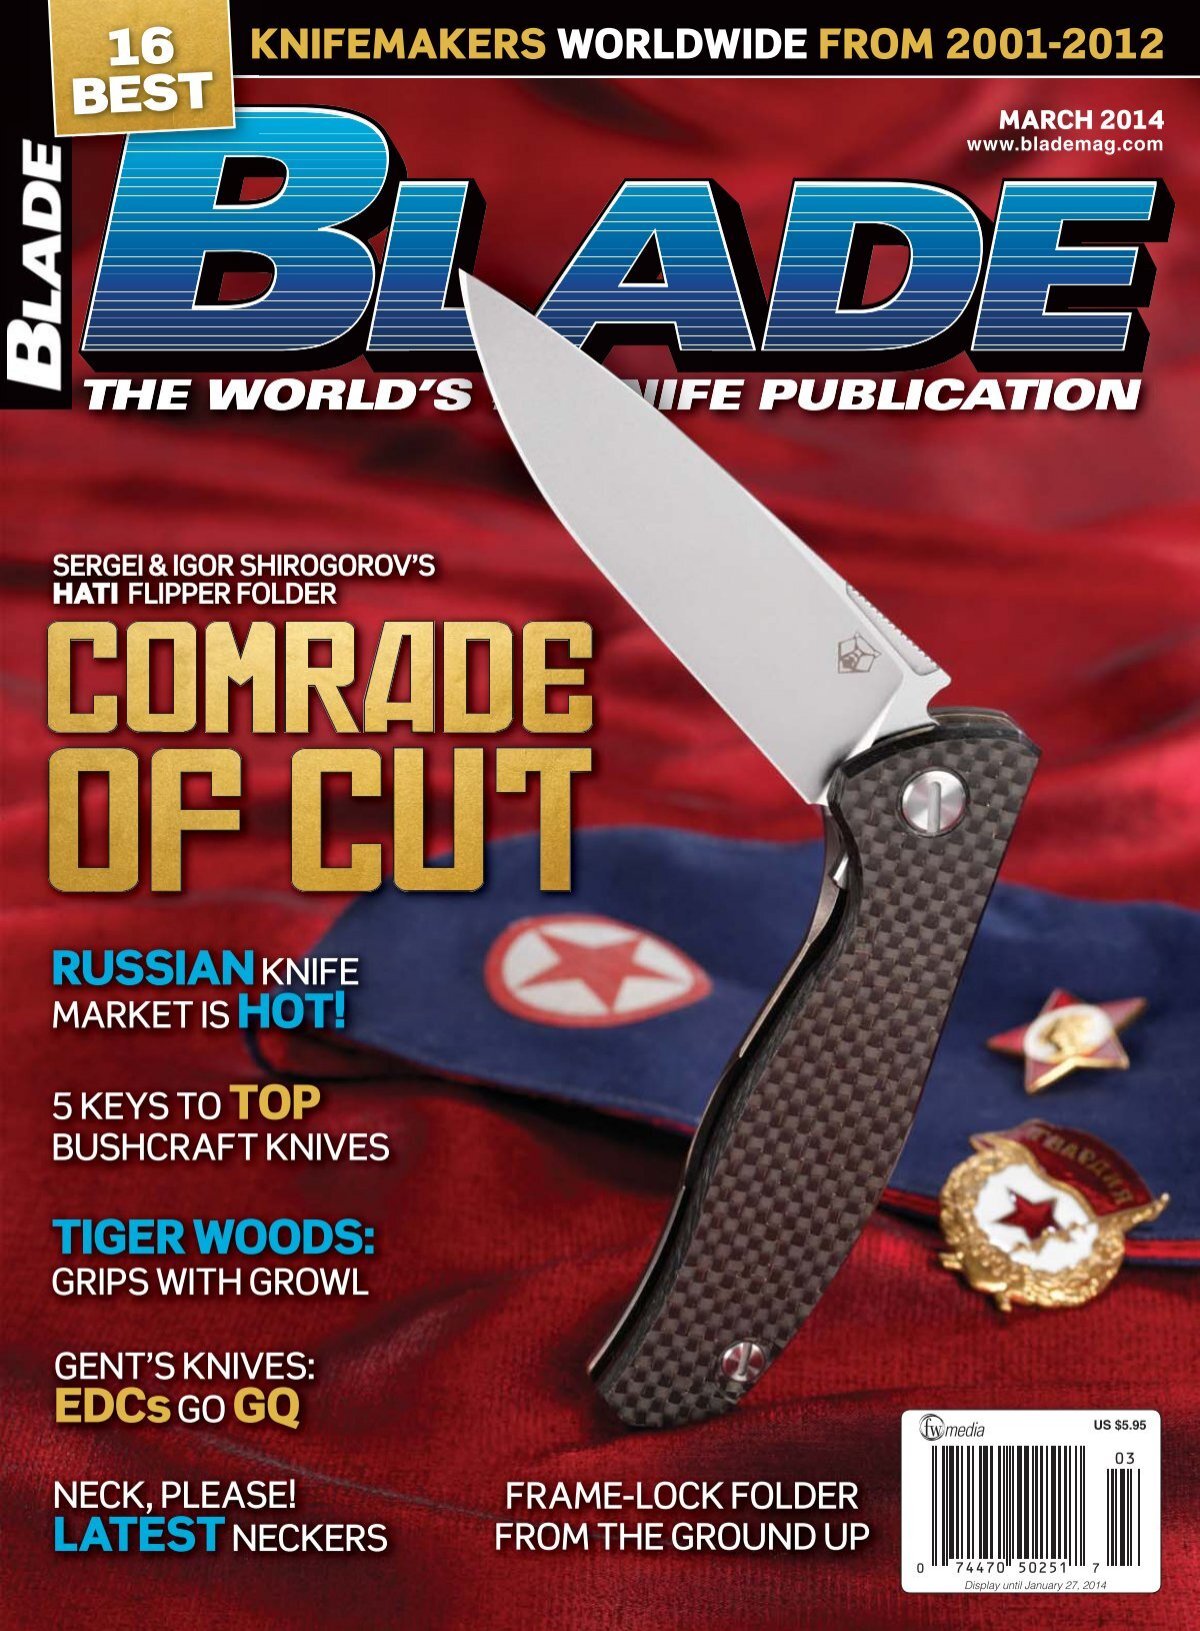 PREMIUM KNIFE SHARPENER – NorthernKnife